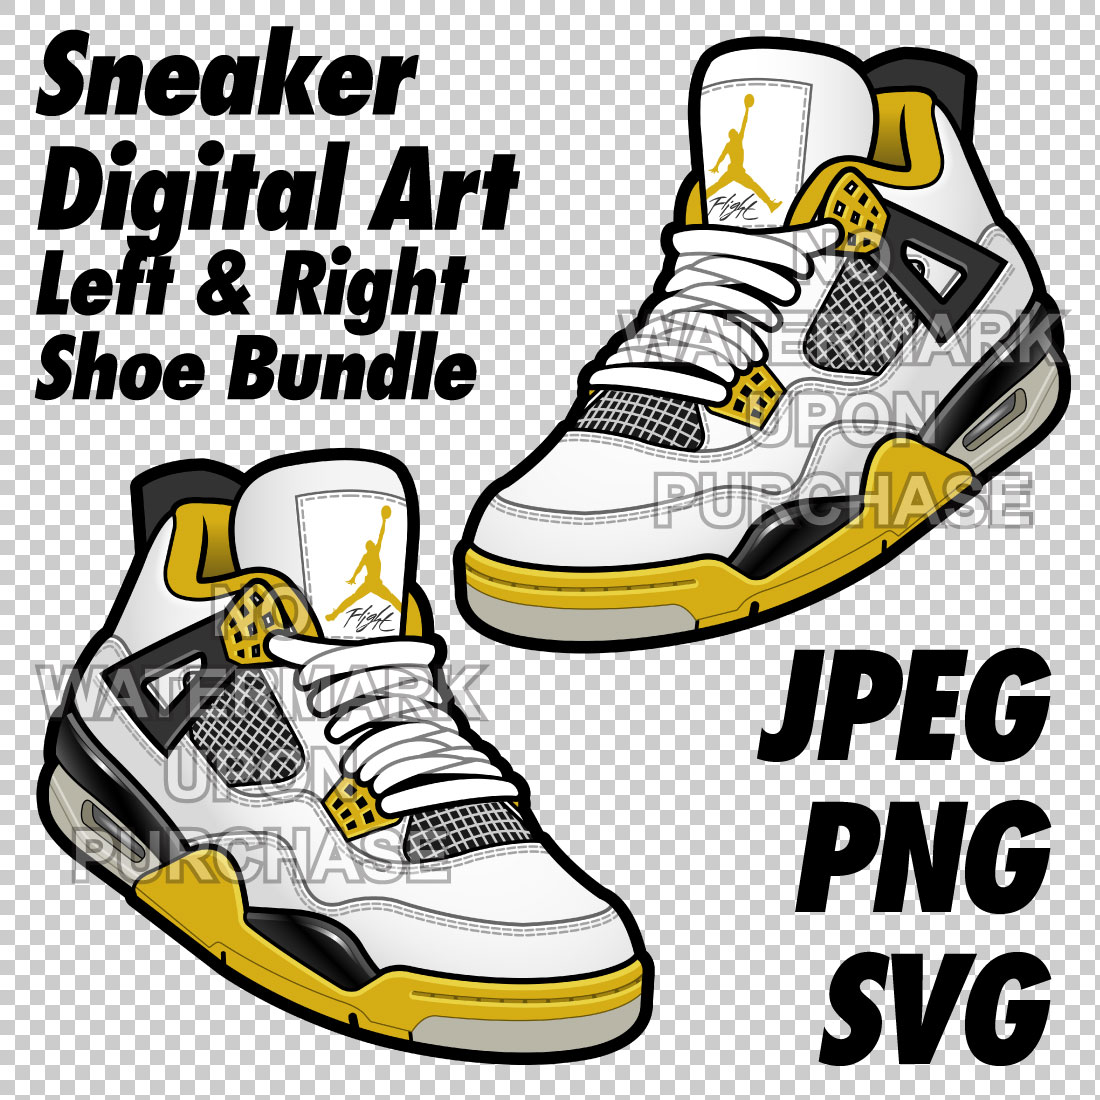 Air Jordan 4 Vivid Sulfur JPEG PNG SVG Sneaker Art Left & Right Shoe Bundle Digital Download cover image.